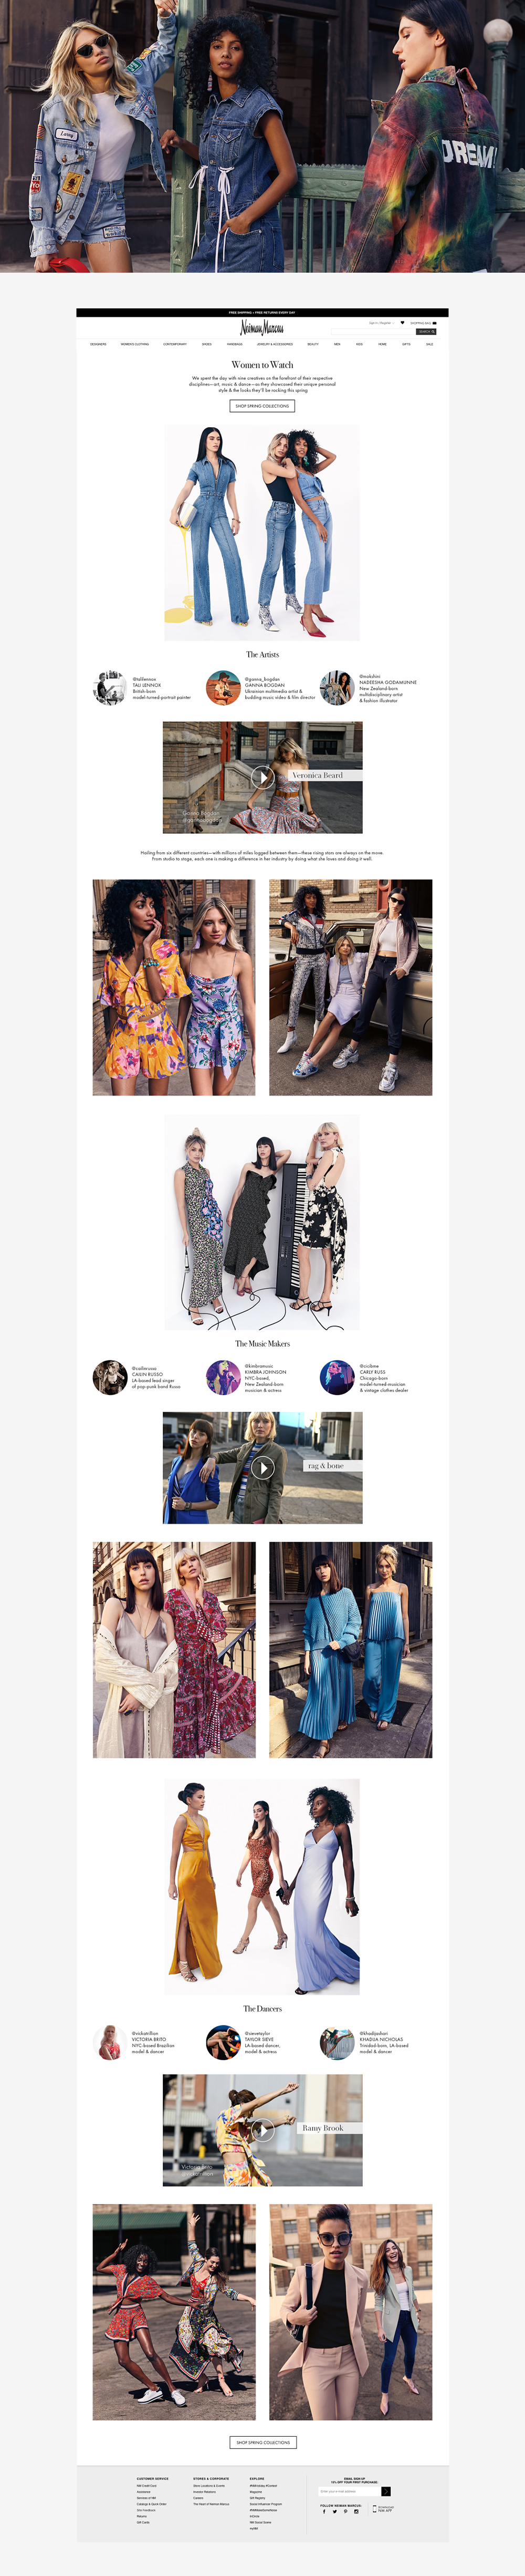 Fashion Influencers, Web Design, Jessica Oviedo